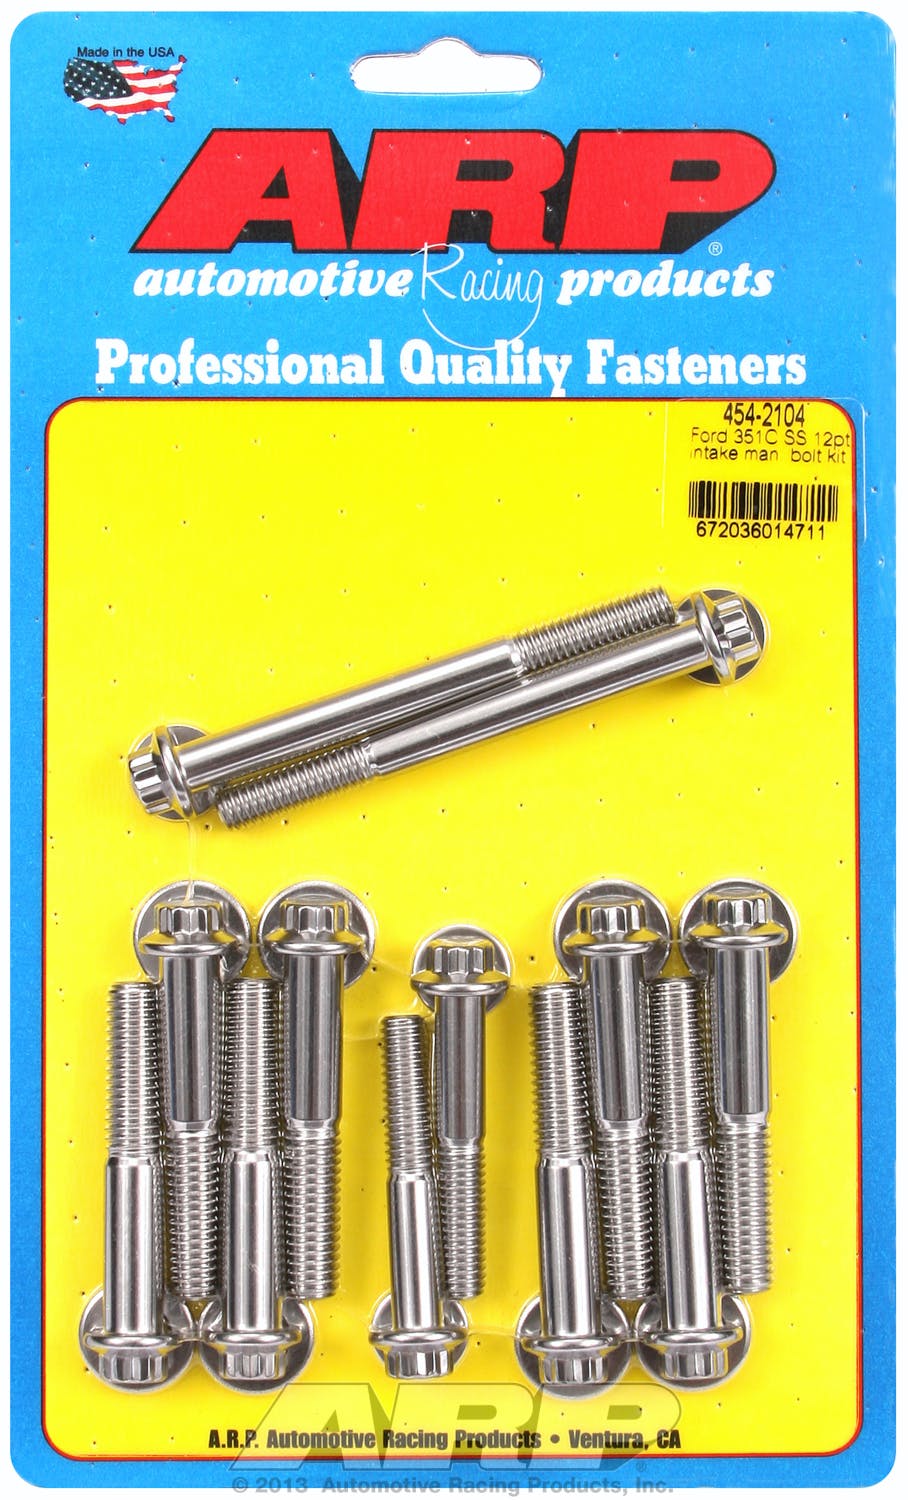 ARP 454-2104 Stainless Steel 12pt intake manifold bolt kit